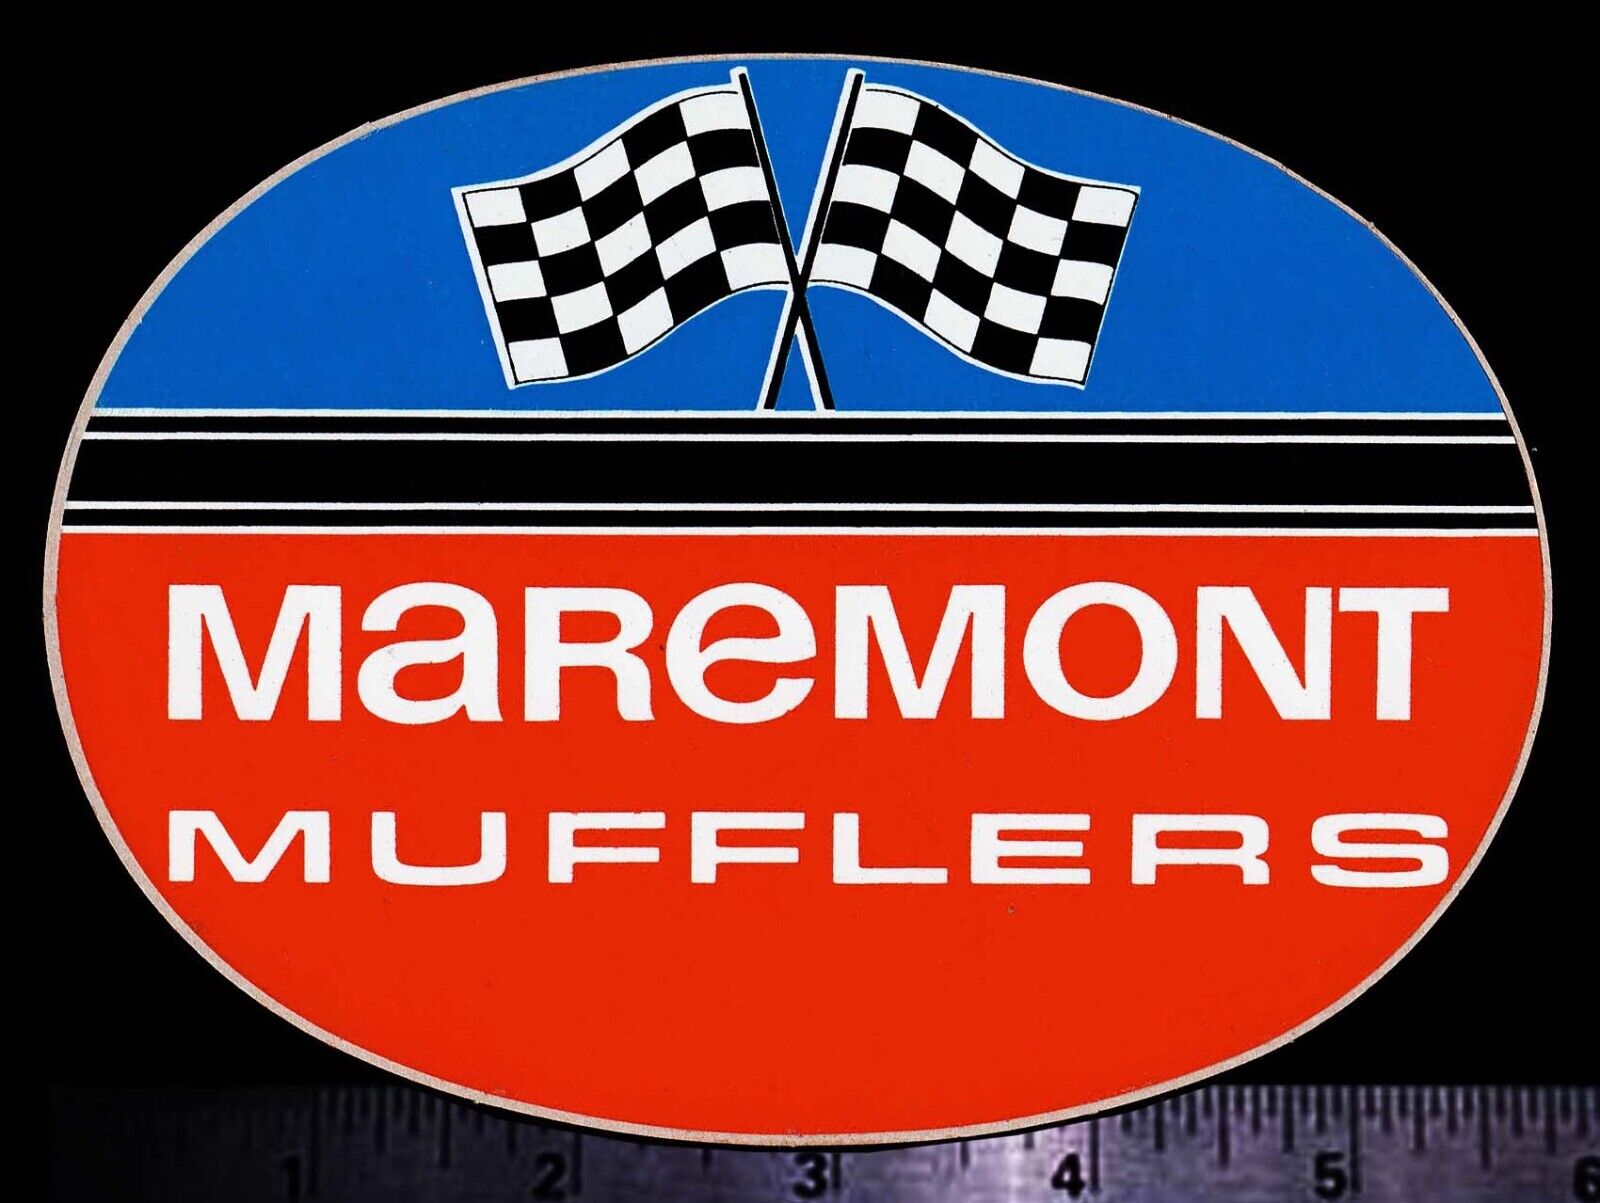 MAREMONT Mufflers - Original Vintage 1960\'s Racing Decal/Sticker